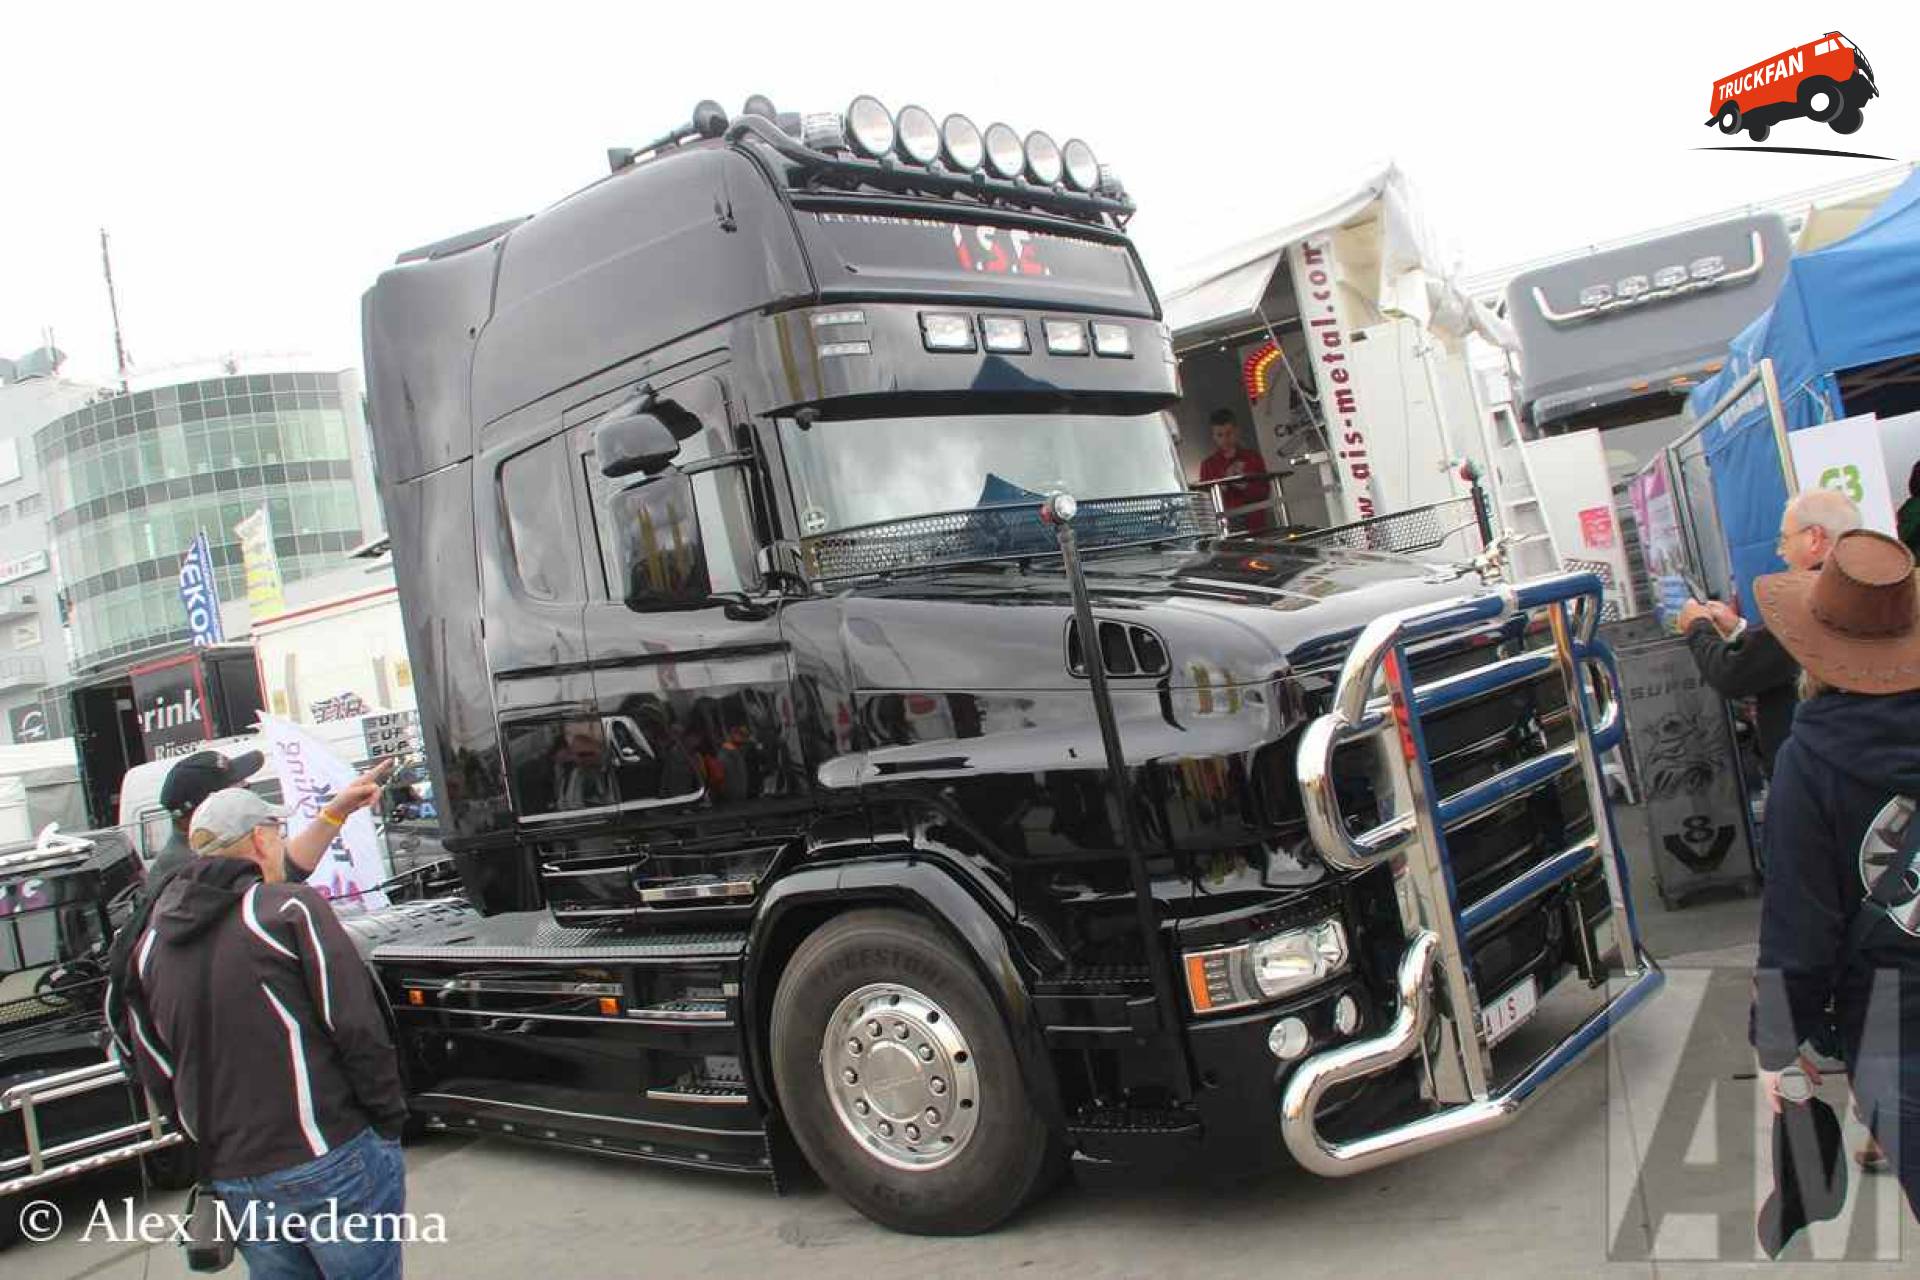 Scania T730